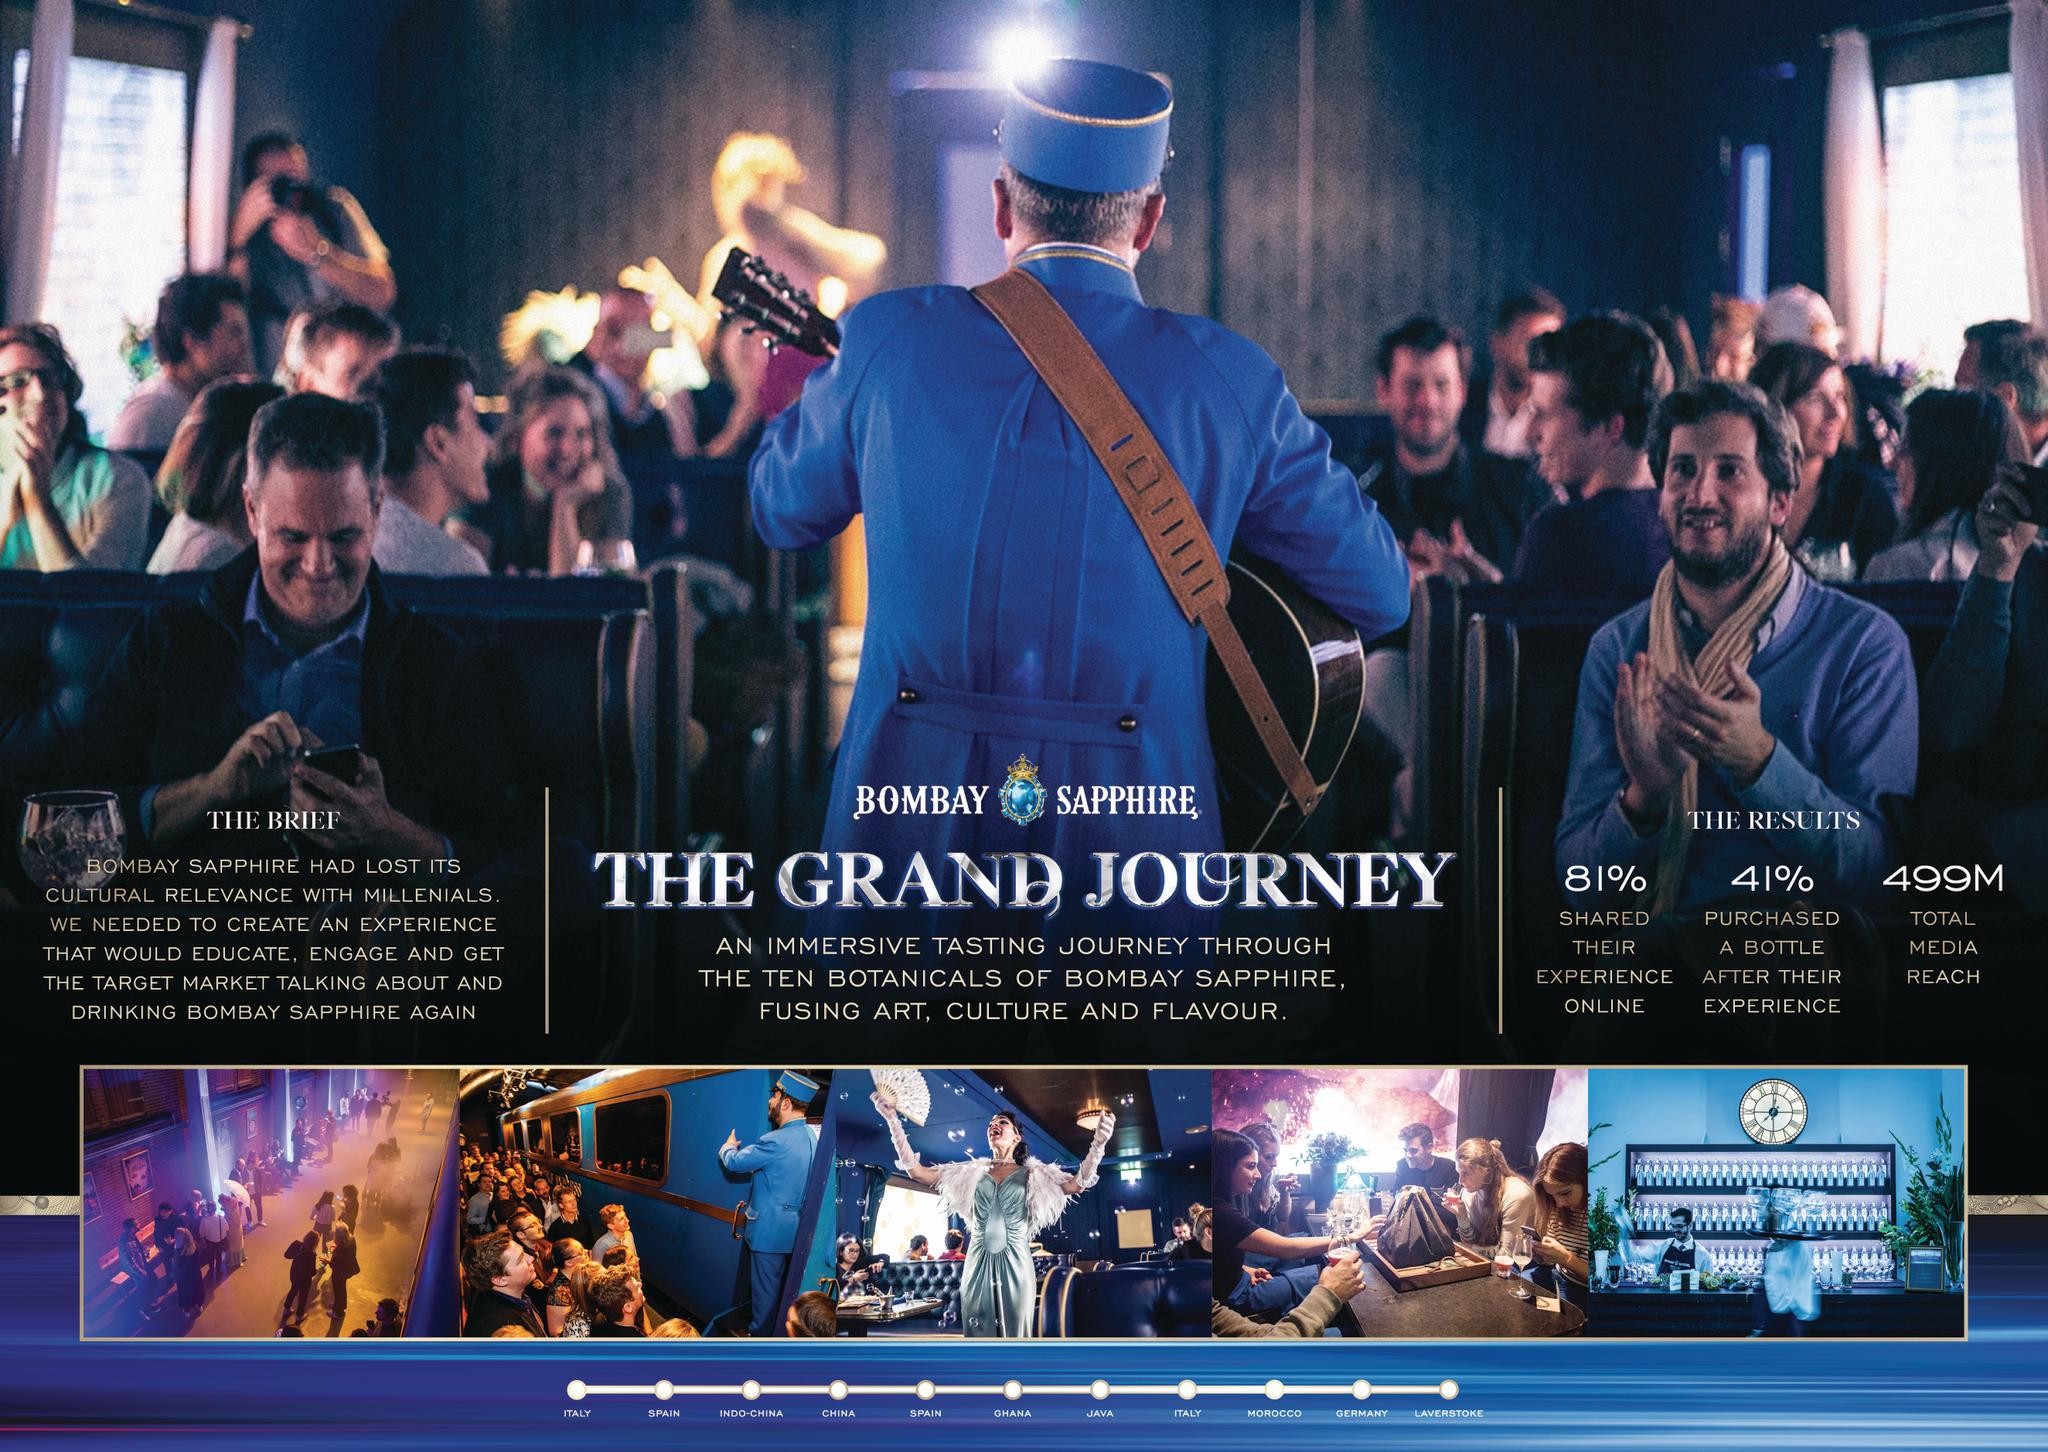 Bombay Sapphire "The Grand Journey"